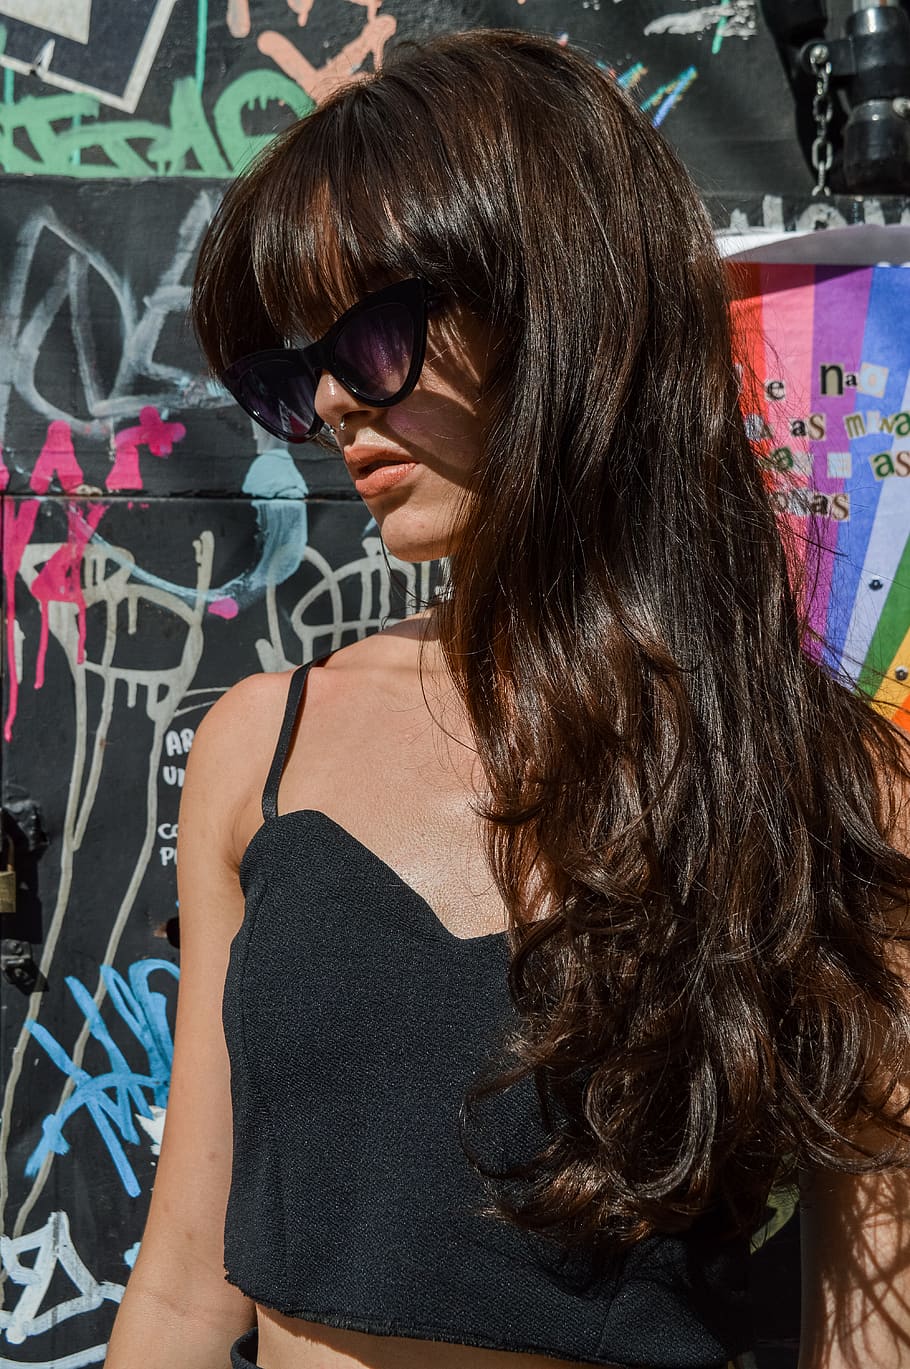 Woman Wearing Black Sunglasses Near Graffiti Wall, attractive